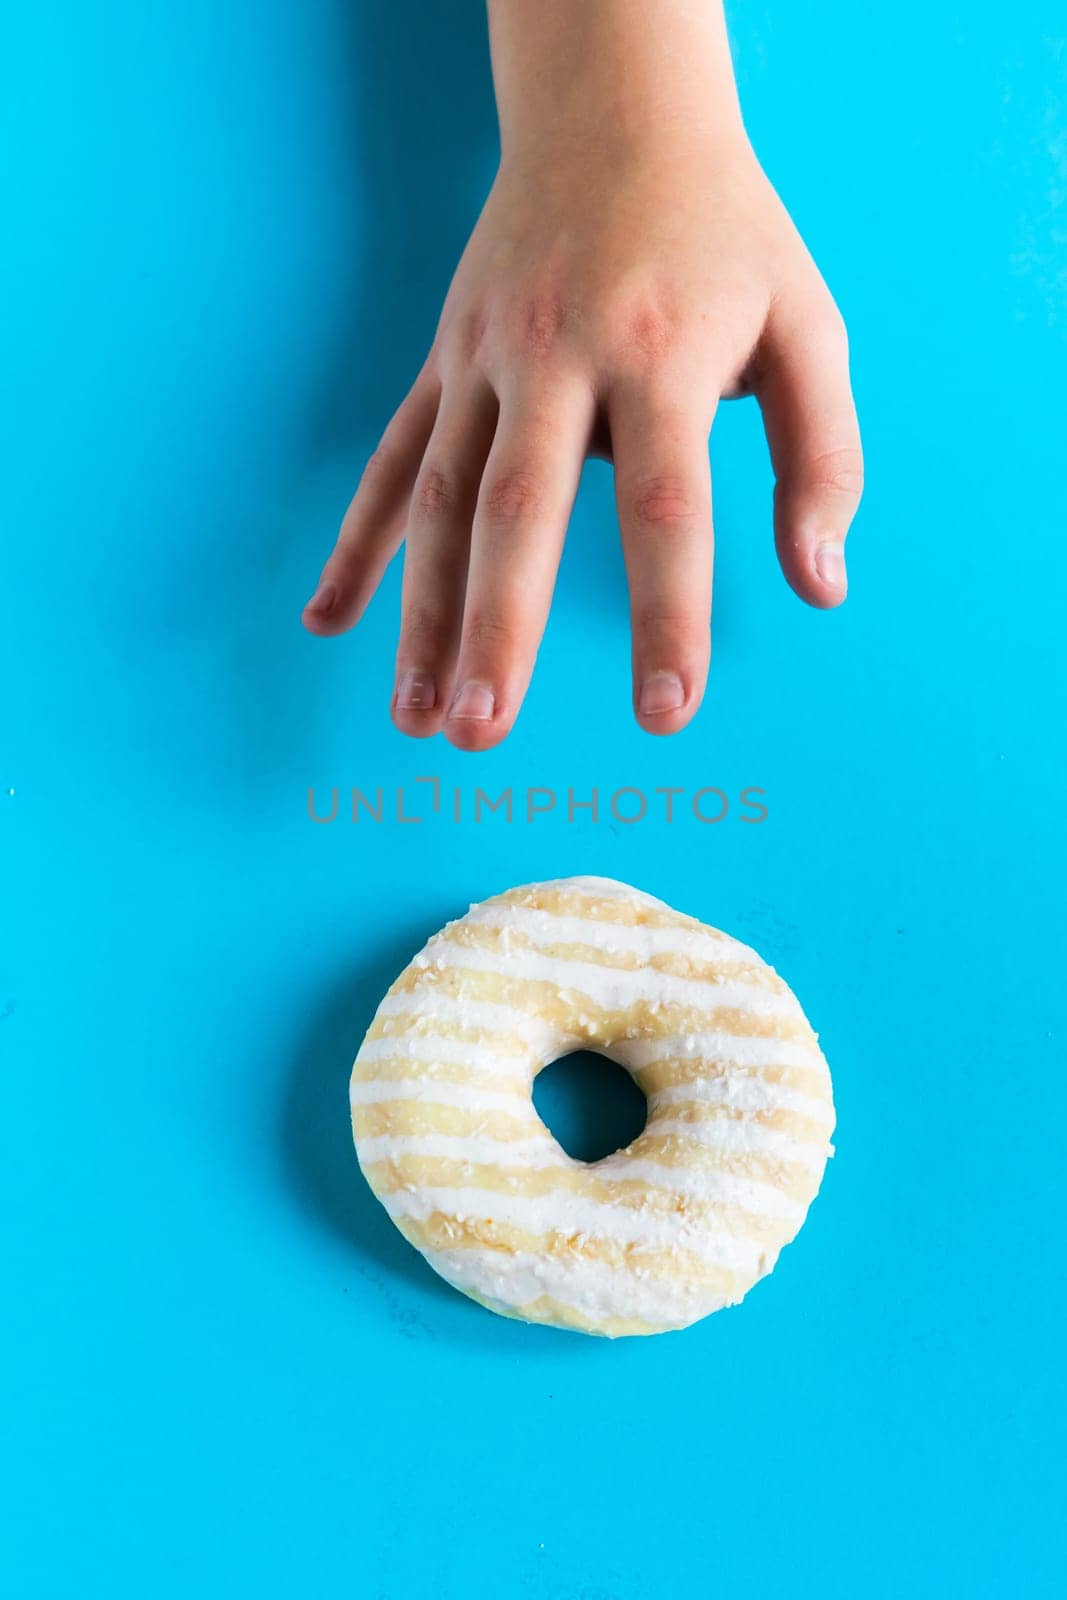 Donut with hazelnuts on blue background, close up by Zelenin